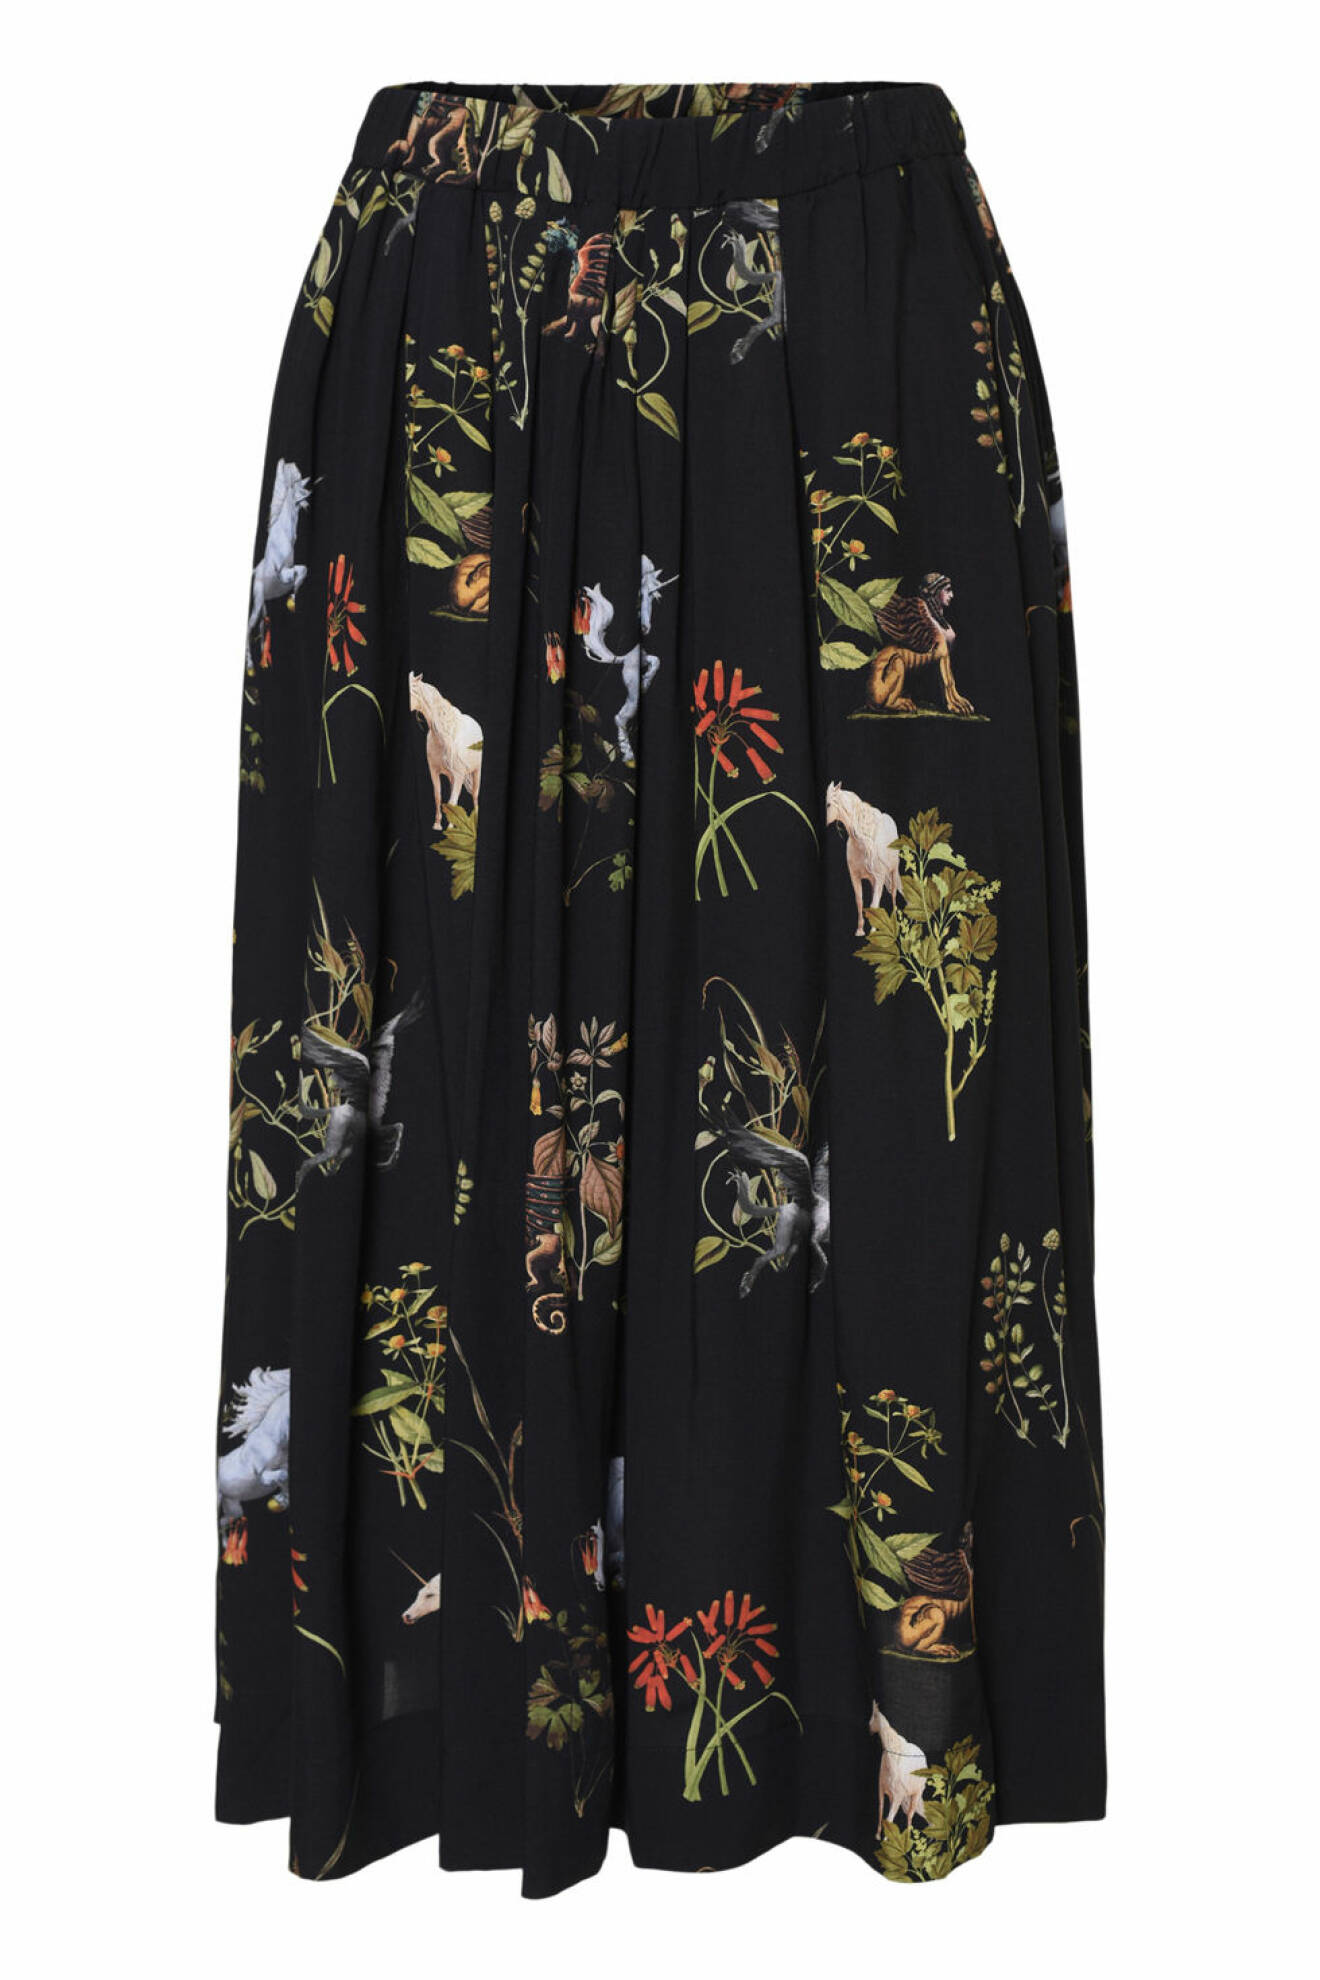 Maria Westerlind x MQ blommig kjol